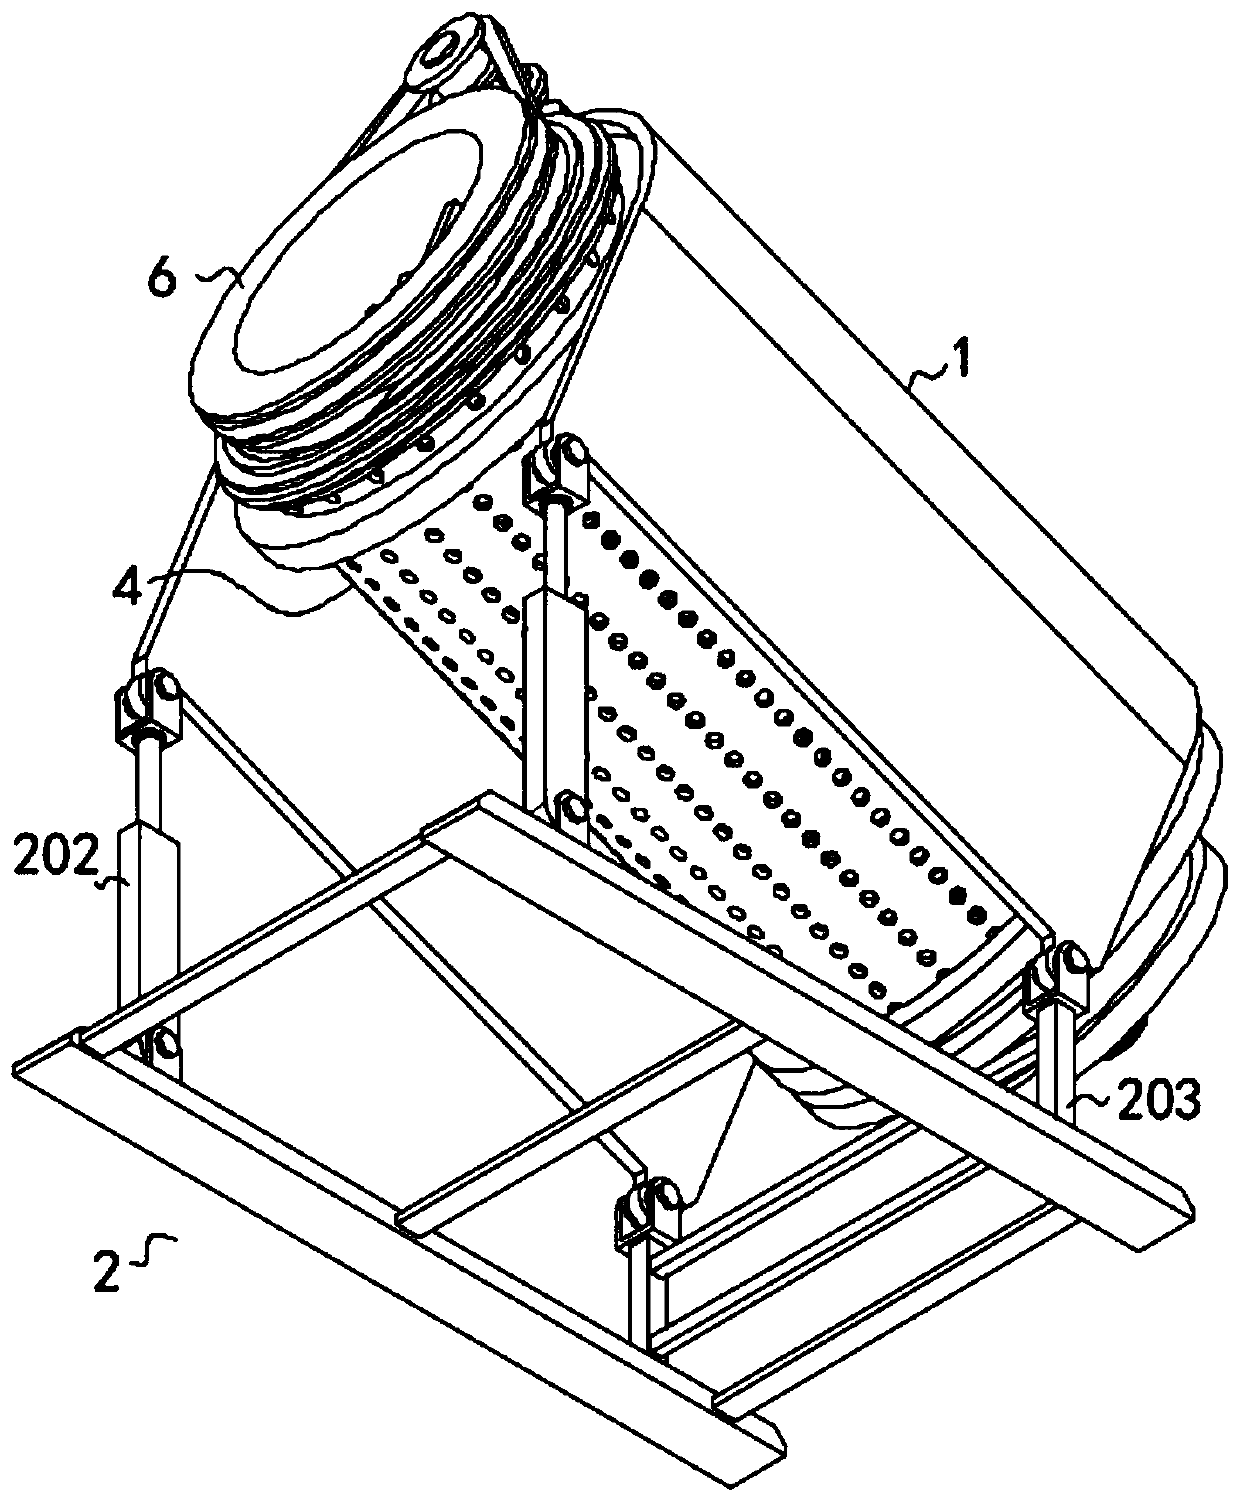 Double-barrel sand screening device